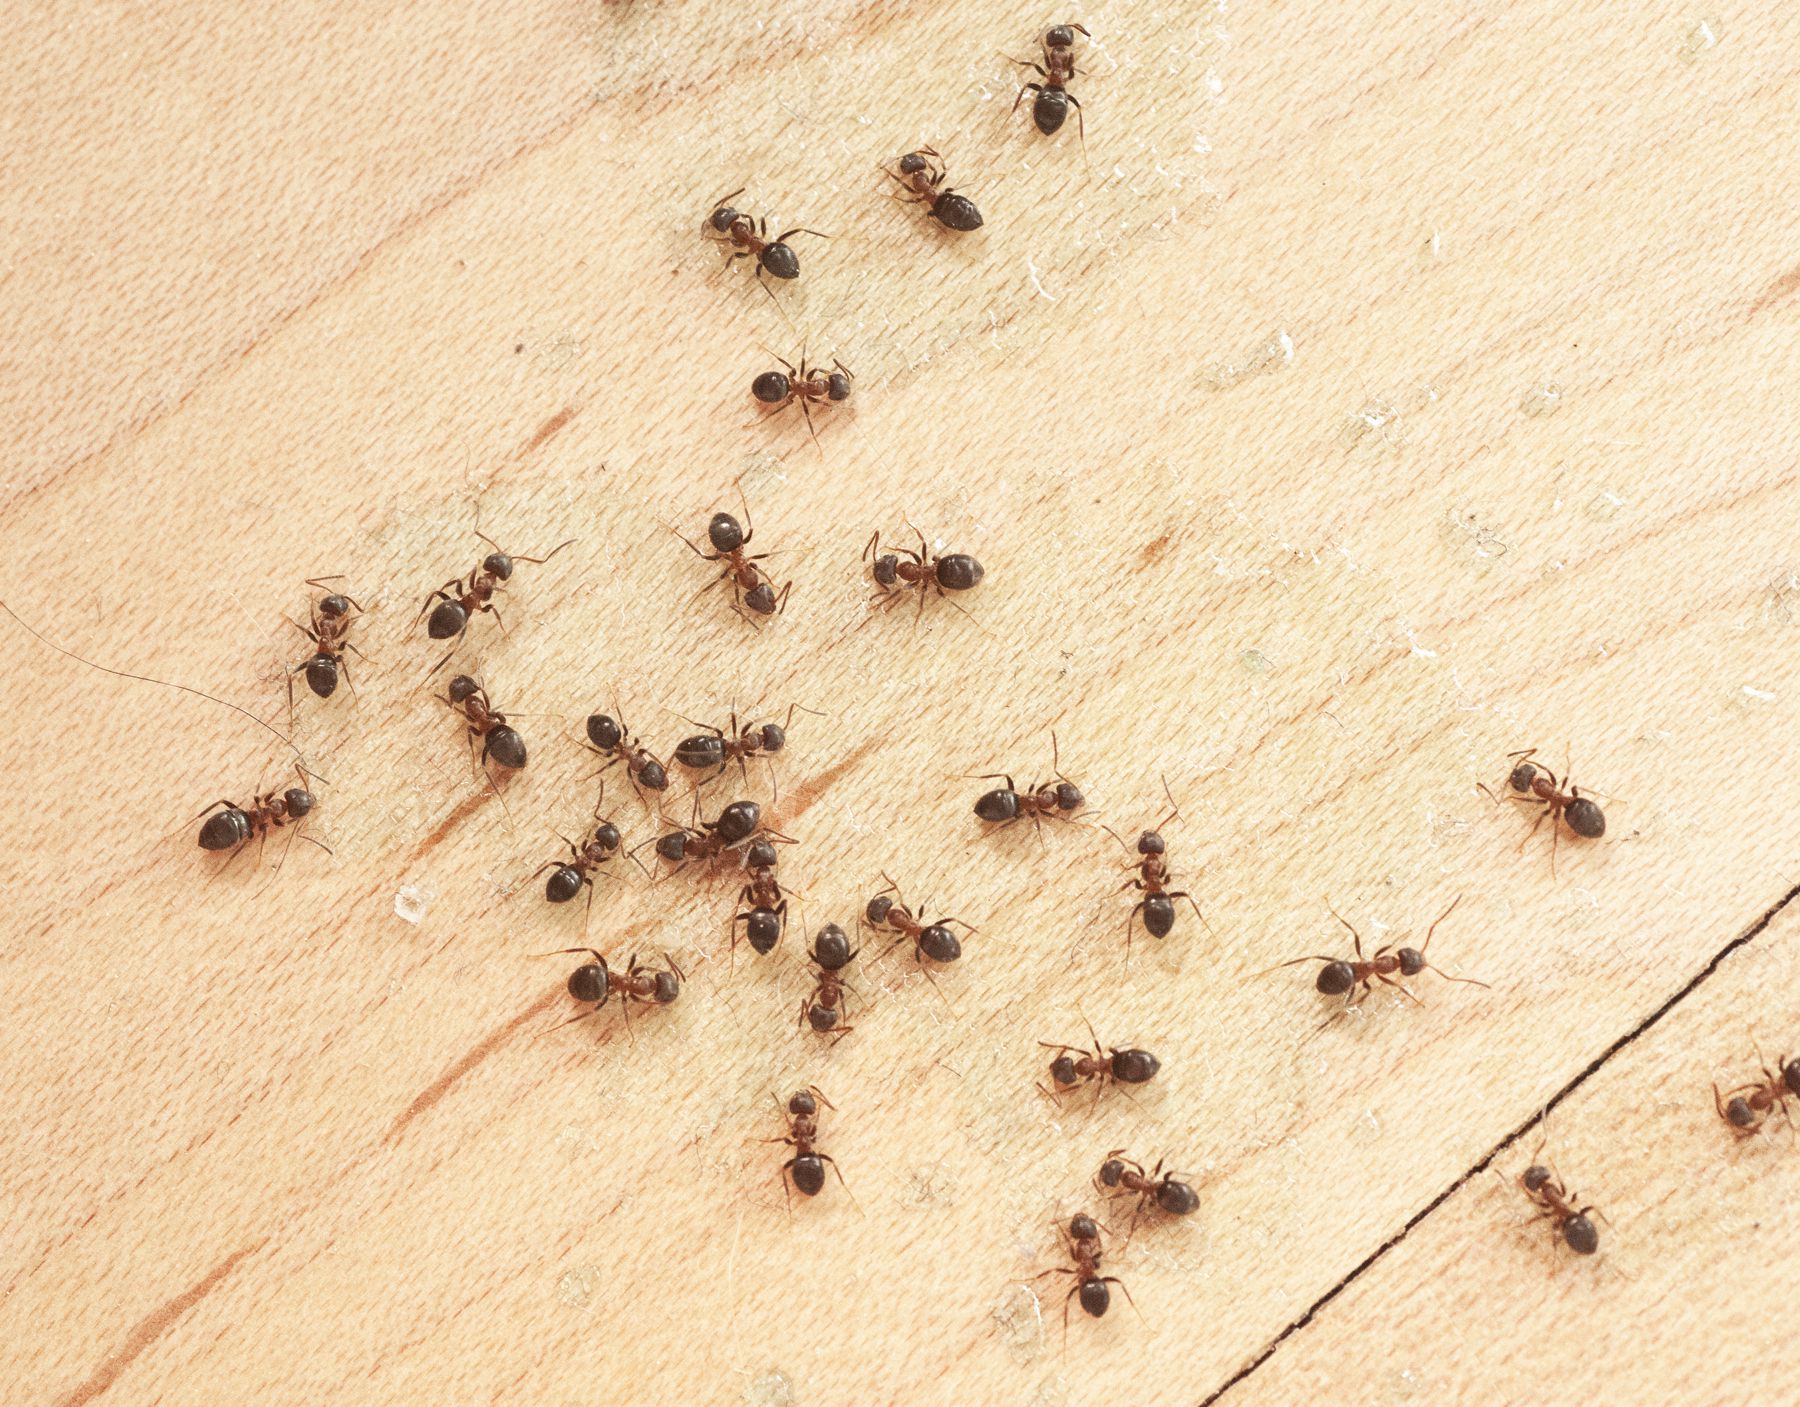 Ants On Wodden Floor Top View Mit Ameisengift 184847542 595bd7e85f9b58843f43fbd9 